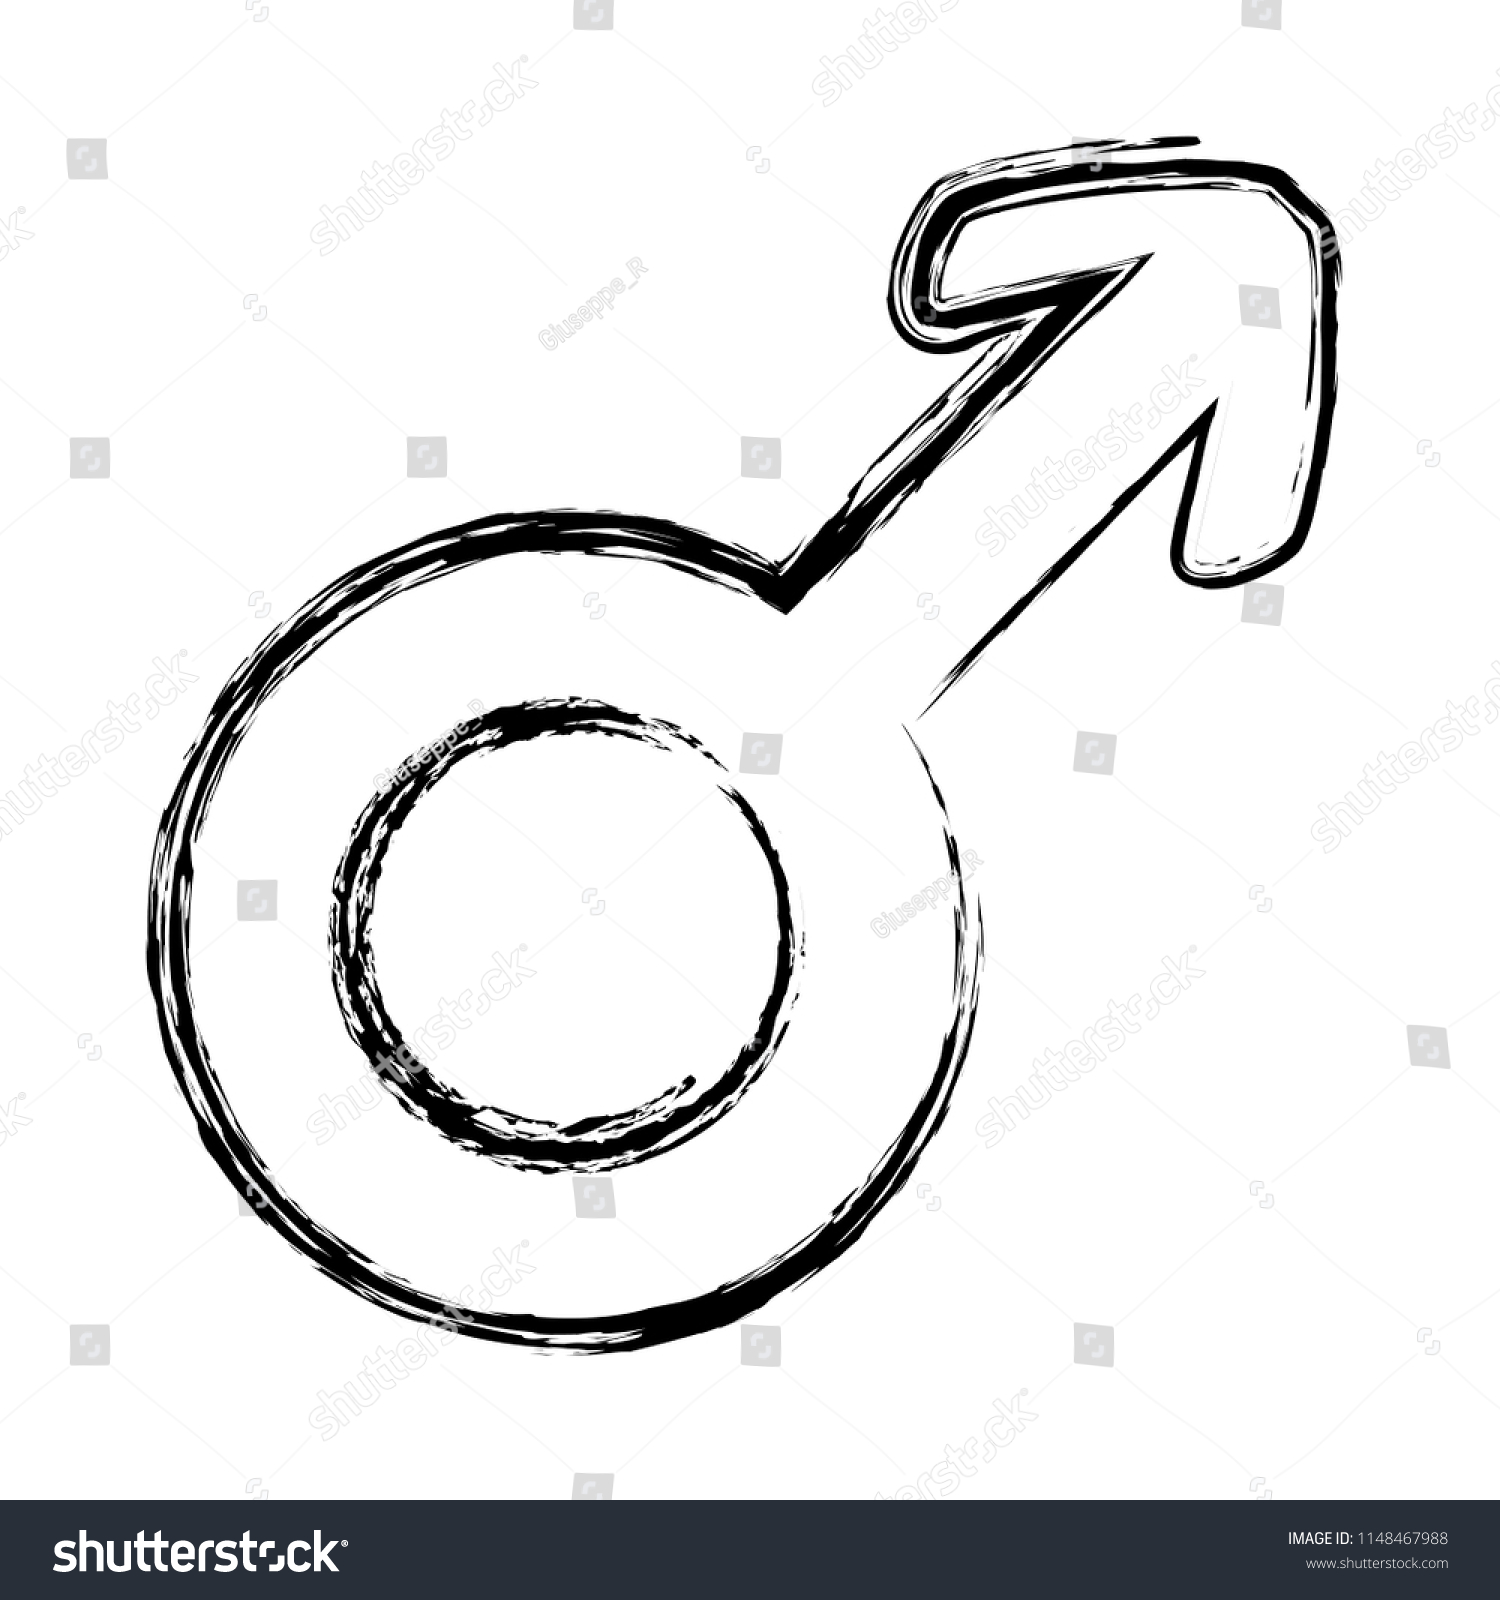 Grunge Pictogram Man Sex Symbol Style Vector De Stock Libre De Regalías 1148467988 Shutterstock 8564